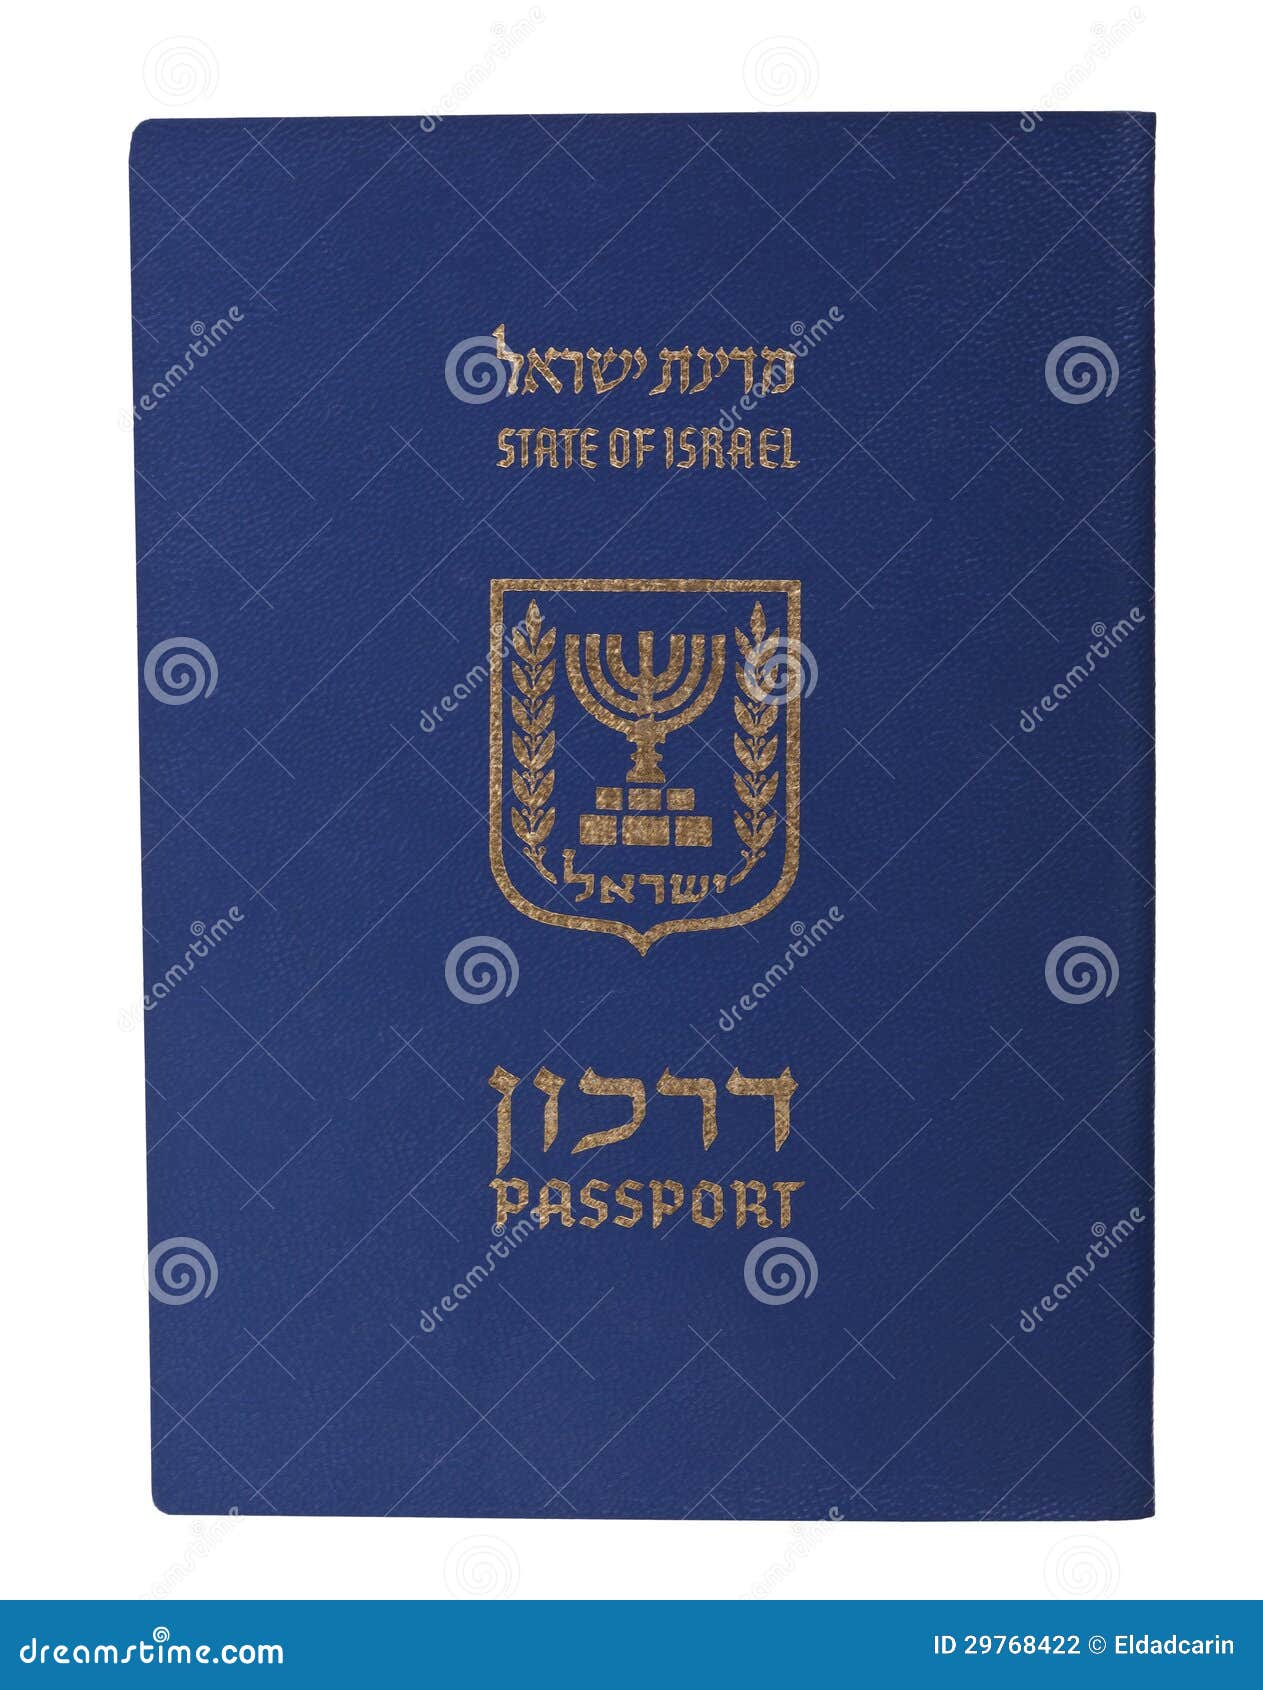  israeli passport